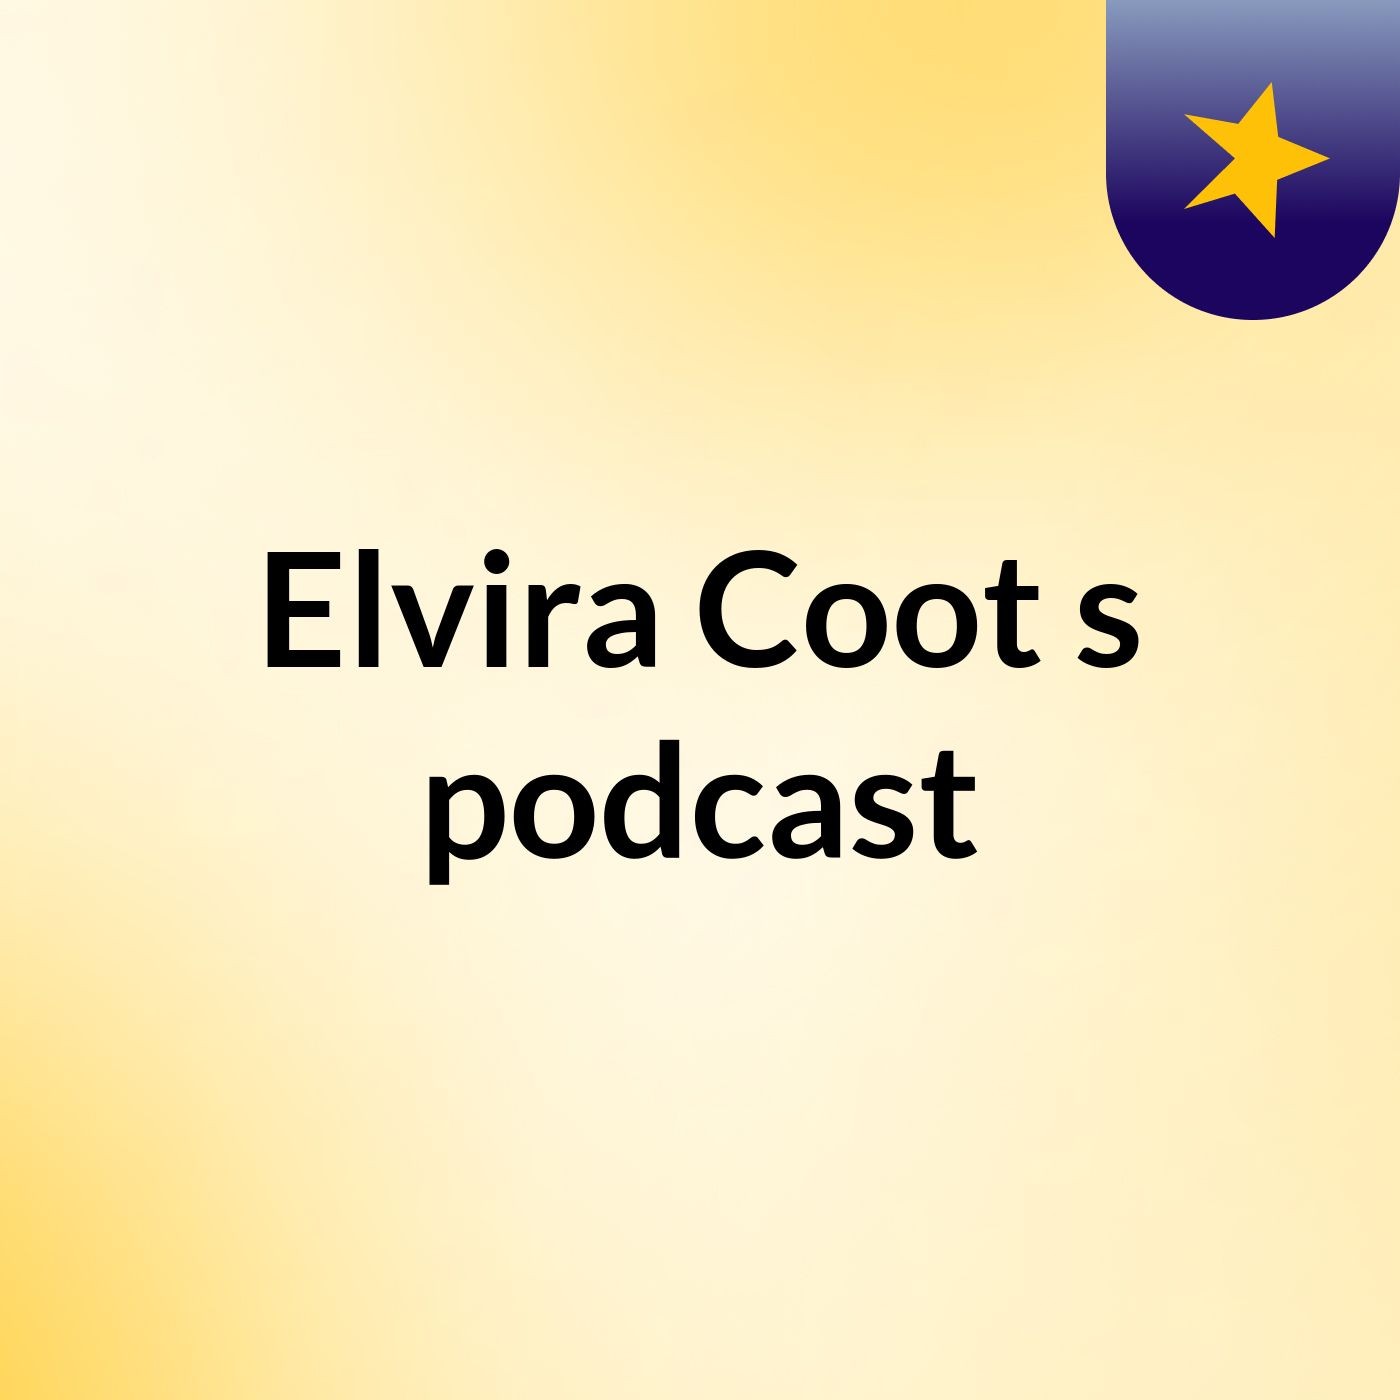 Episode 13 - Elvira Coot's podcast